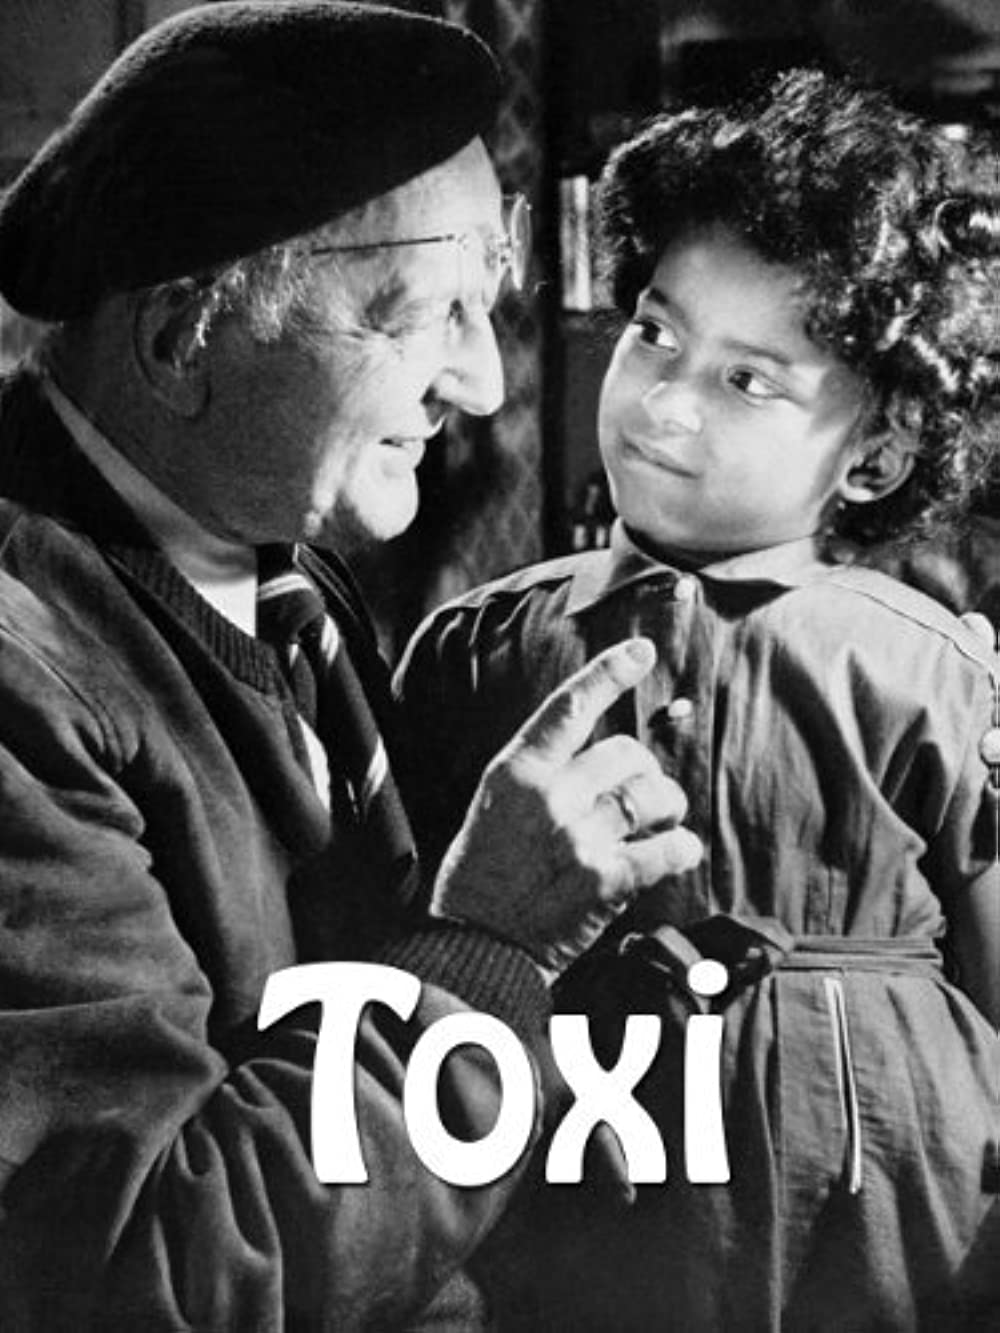 Filmbeschreibung zu Toxi